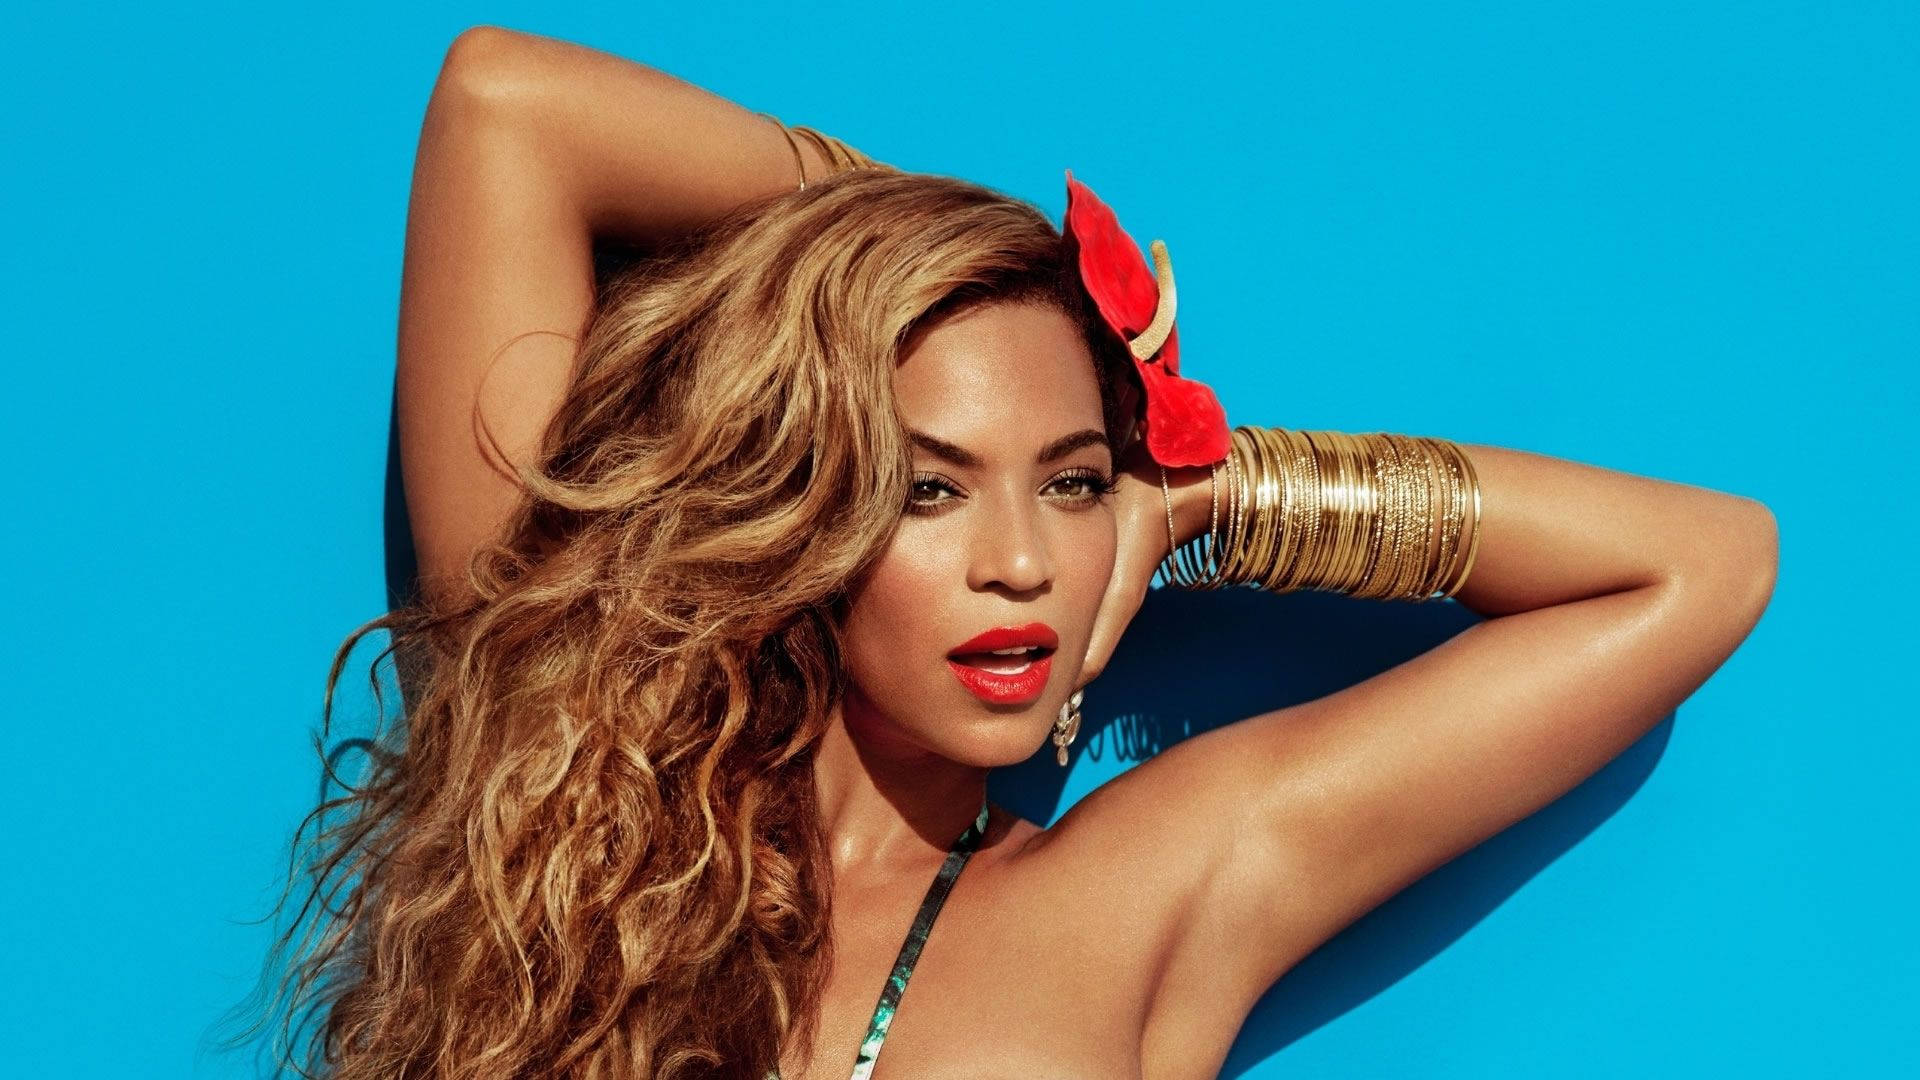 Free Beyonce Wallpaper Downloads, [100+] Beyonce Wallpapers for FREE |  